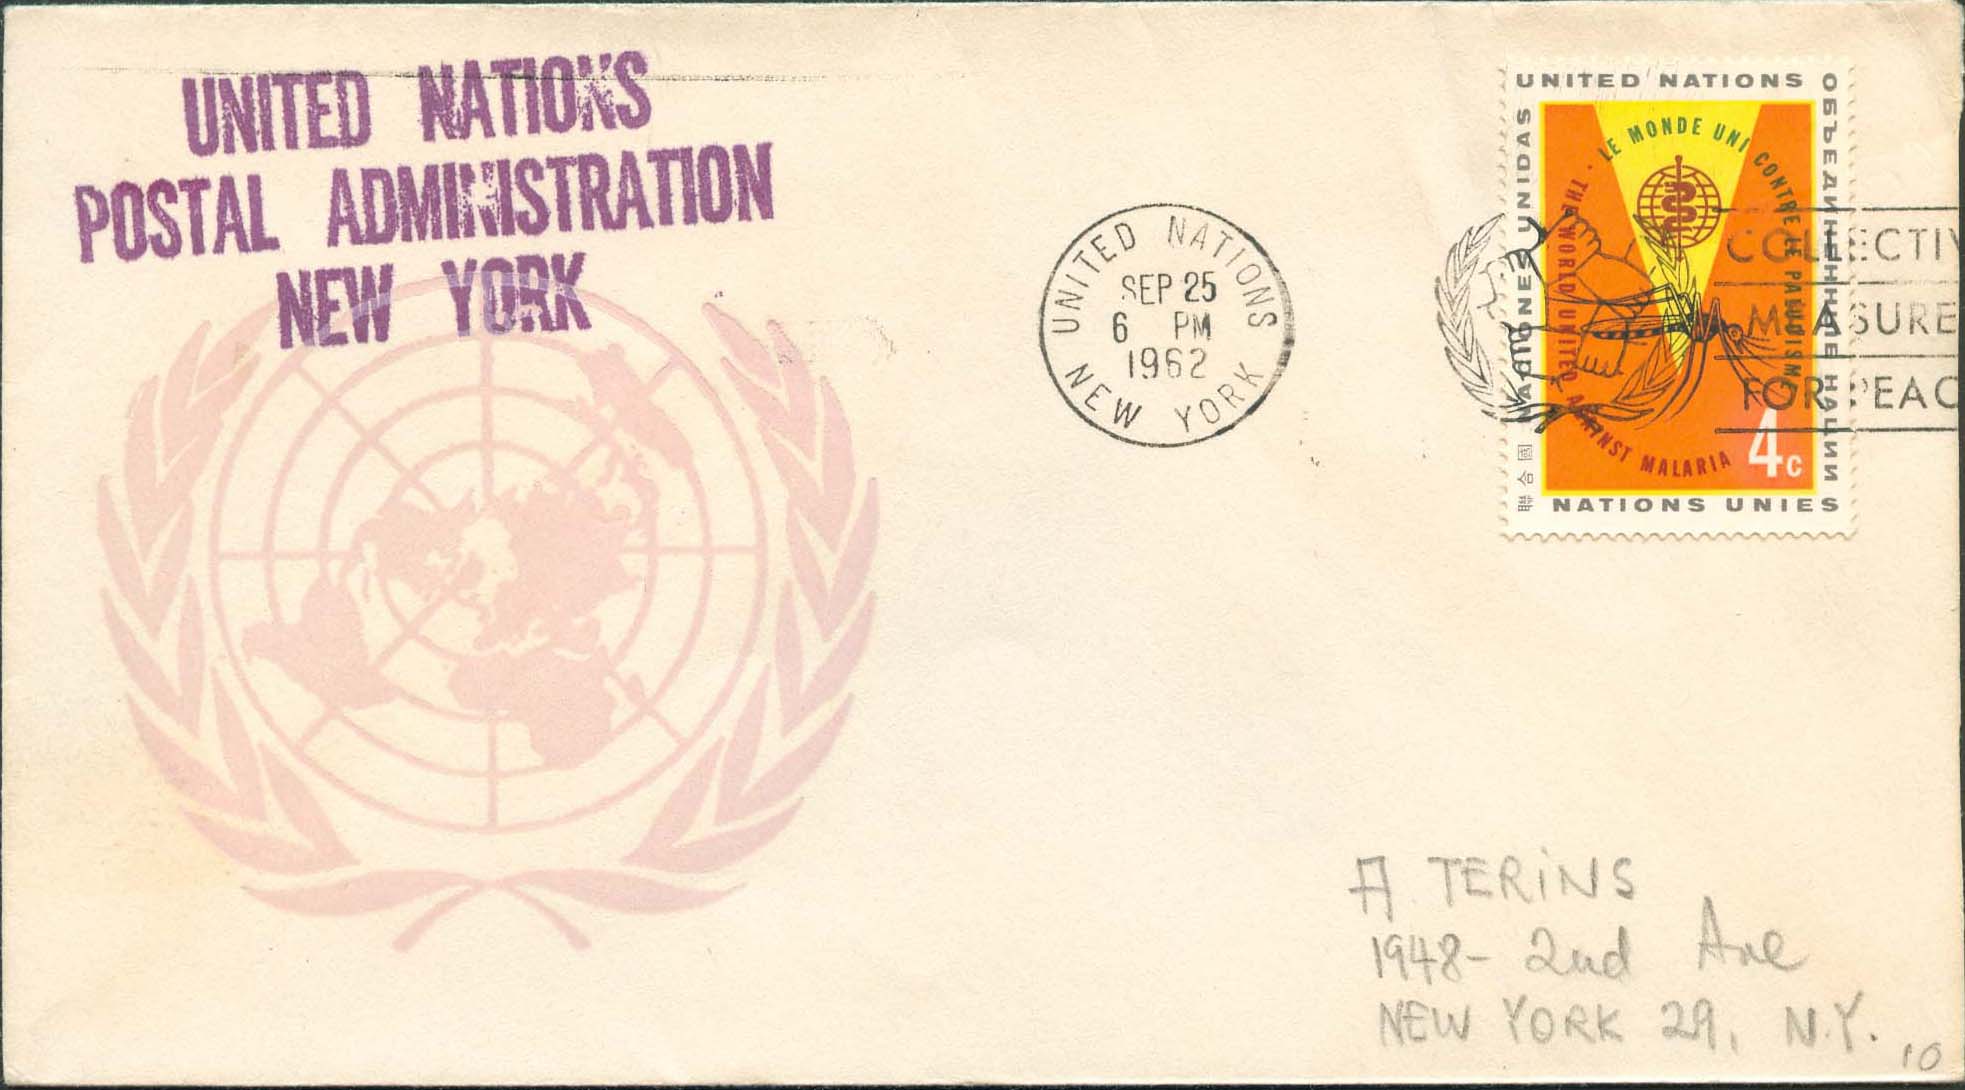 Scott 102 1st print - Sept 25, 1962 <br />Machine slogan cancel "Collective Measures for Peace"<br />UN Postal Administration rubber stamped return address